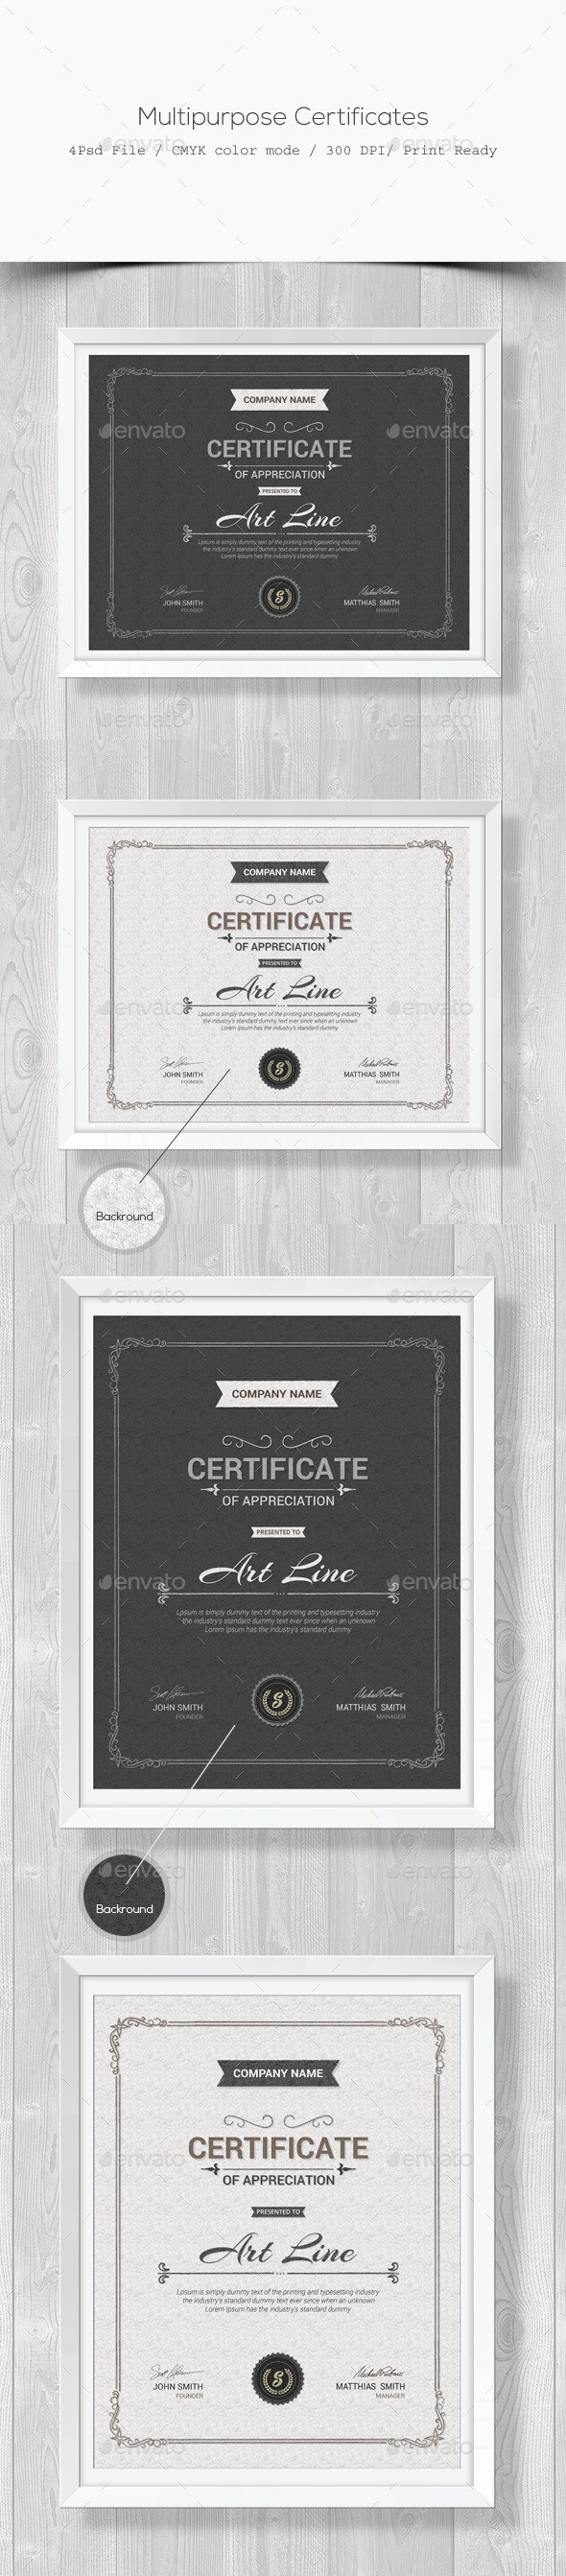 Multipurpose certificates preview